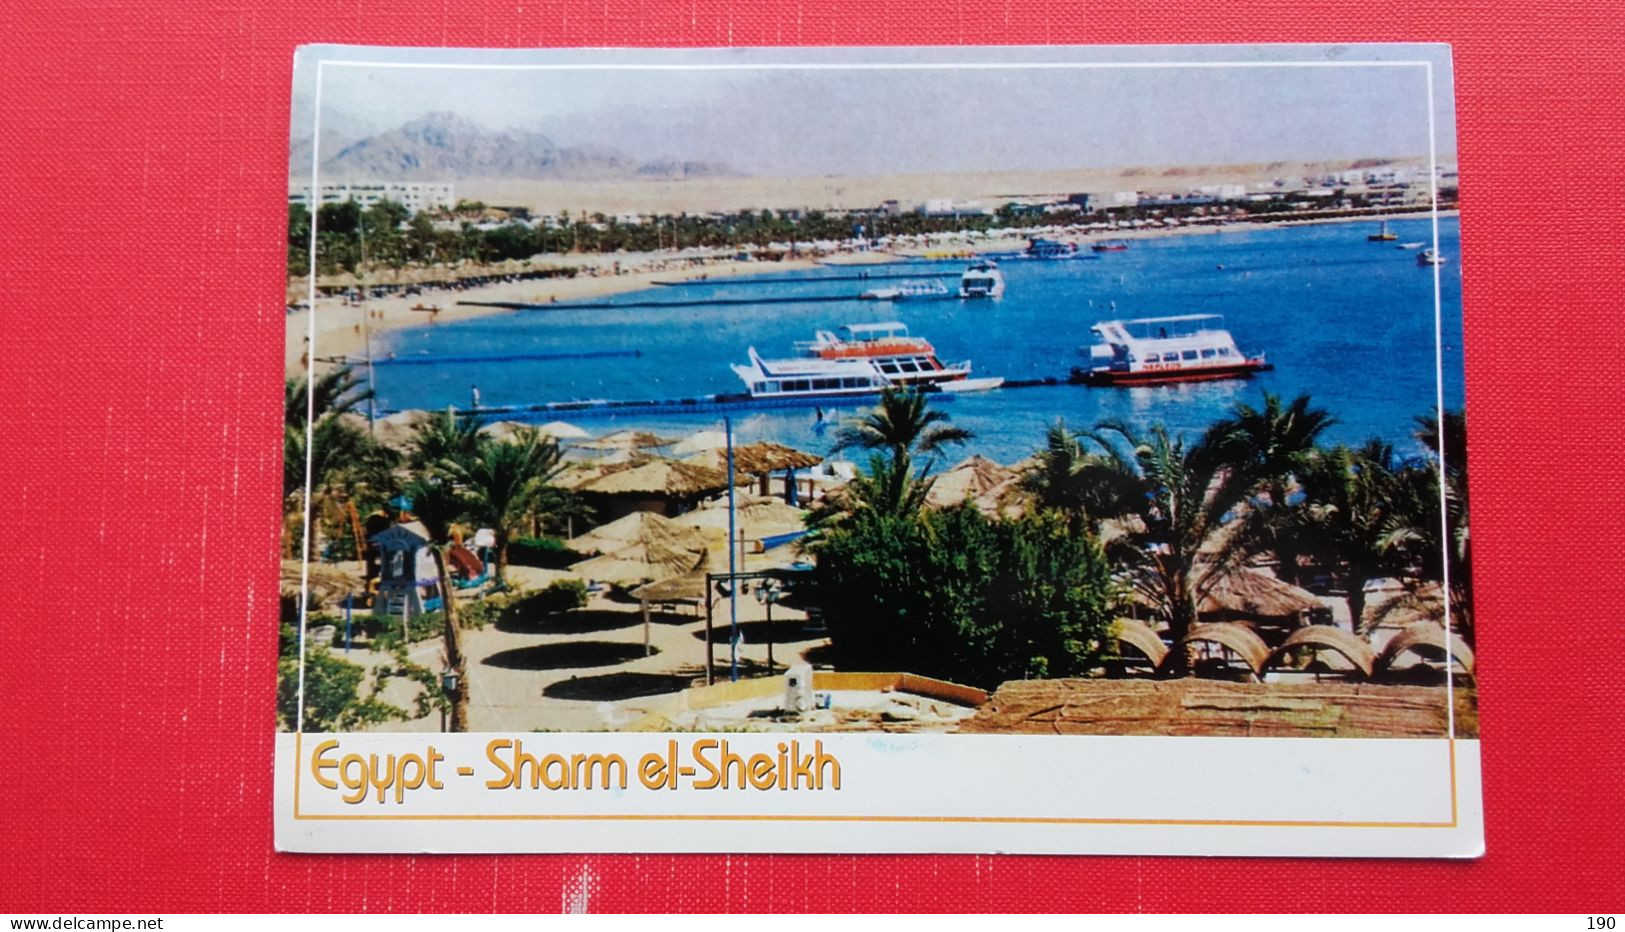 Sinai.Sharm El-Sheikh - Sharm El Sheikh